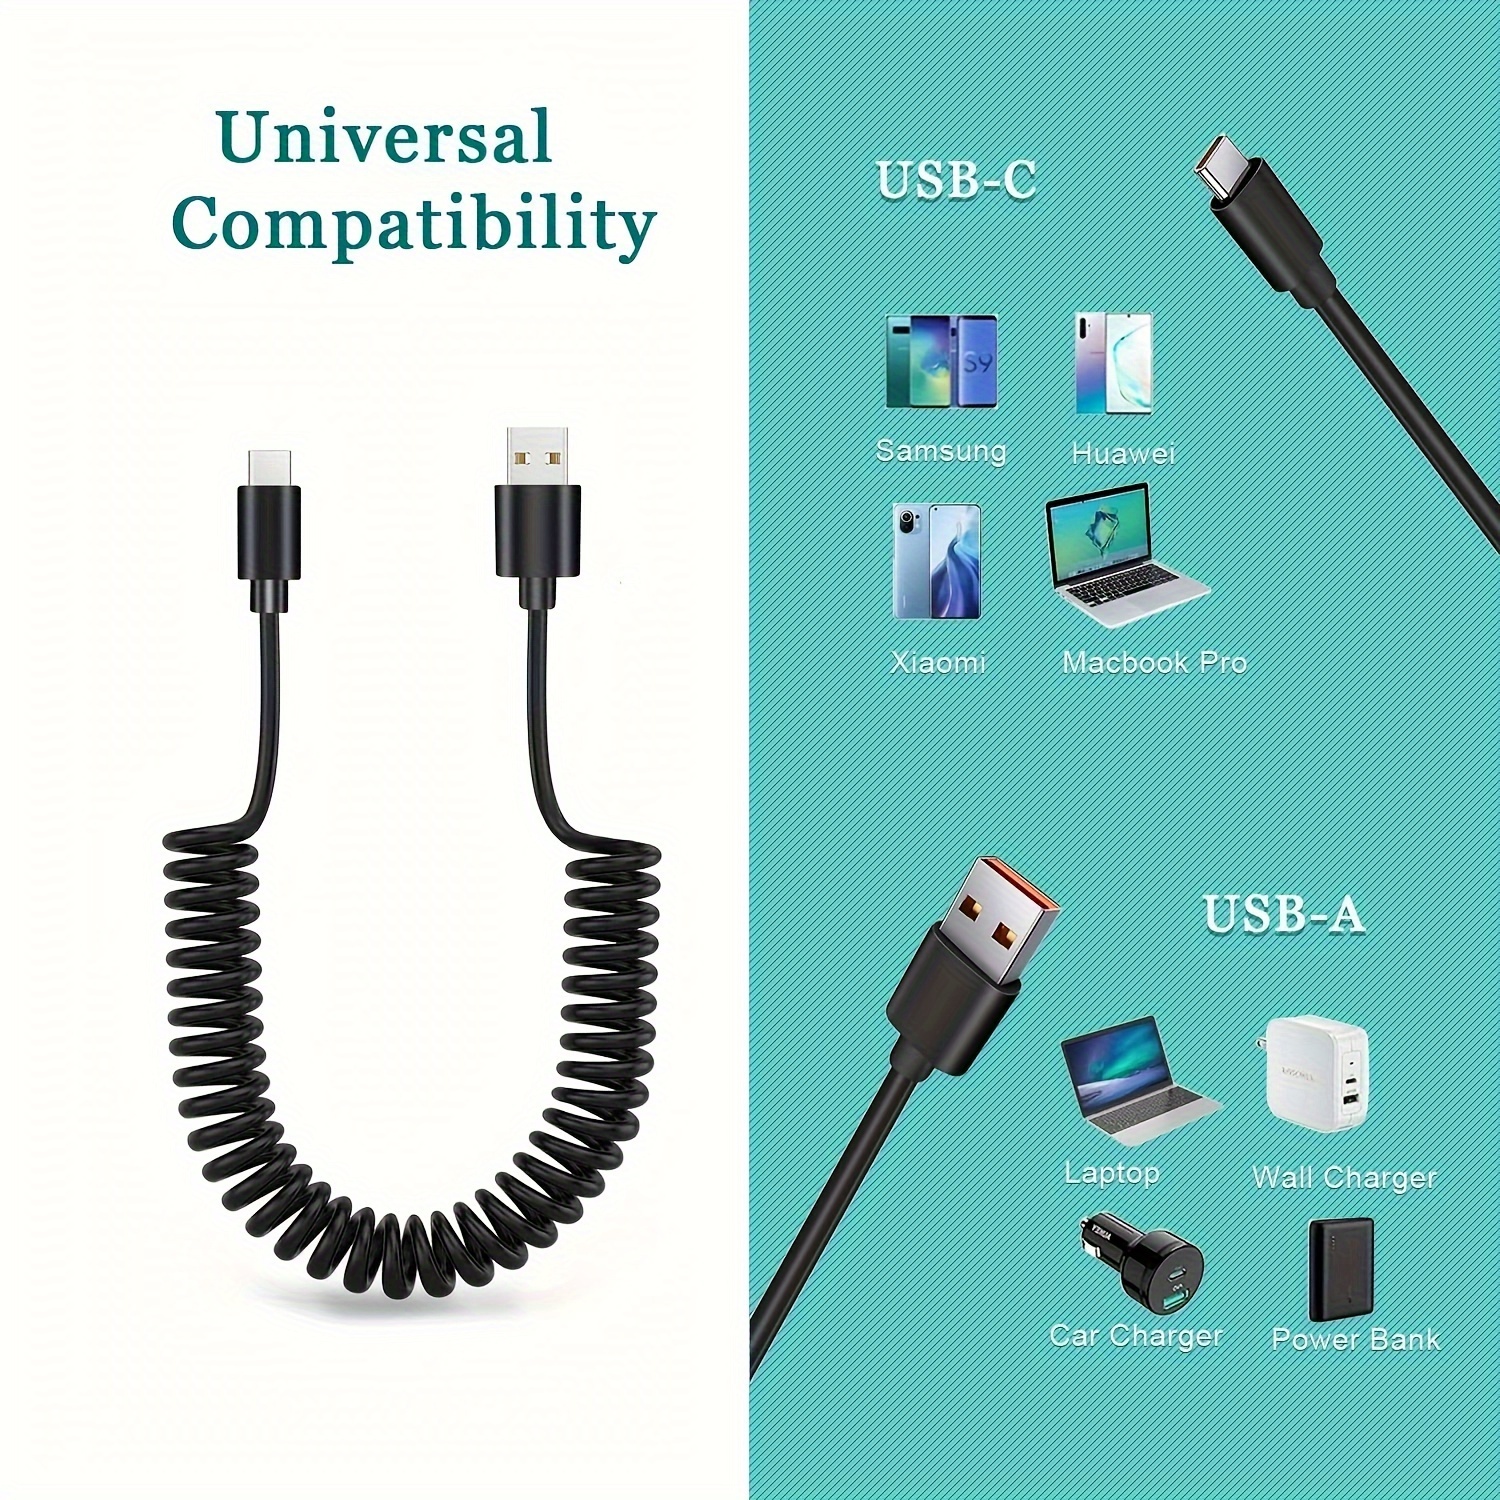 VENTION Cable USB C de 10 pies, USB A a USB tipo C, cable de carga rápida  3A, cable USB C trenzado de nailon compatible con Samsung Galaxy S10 S9 S8